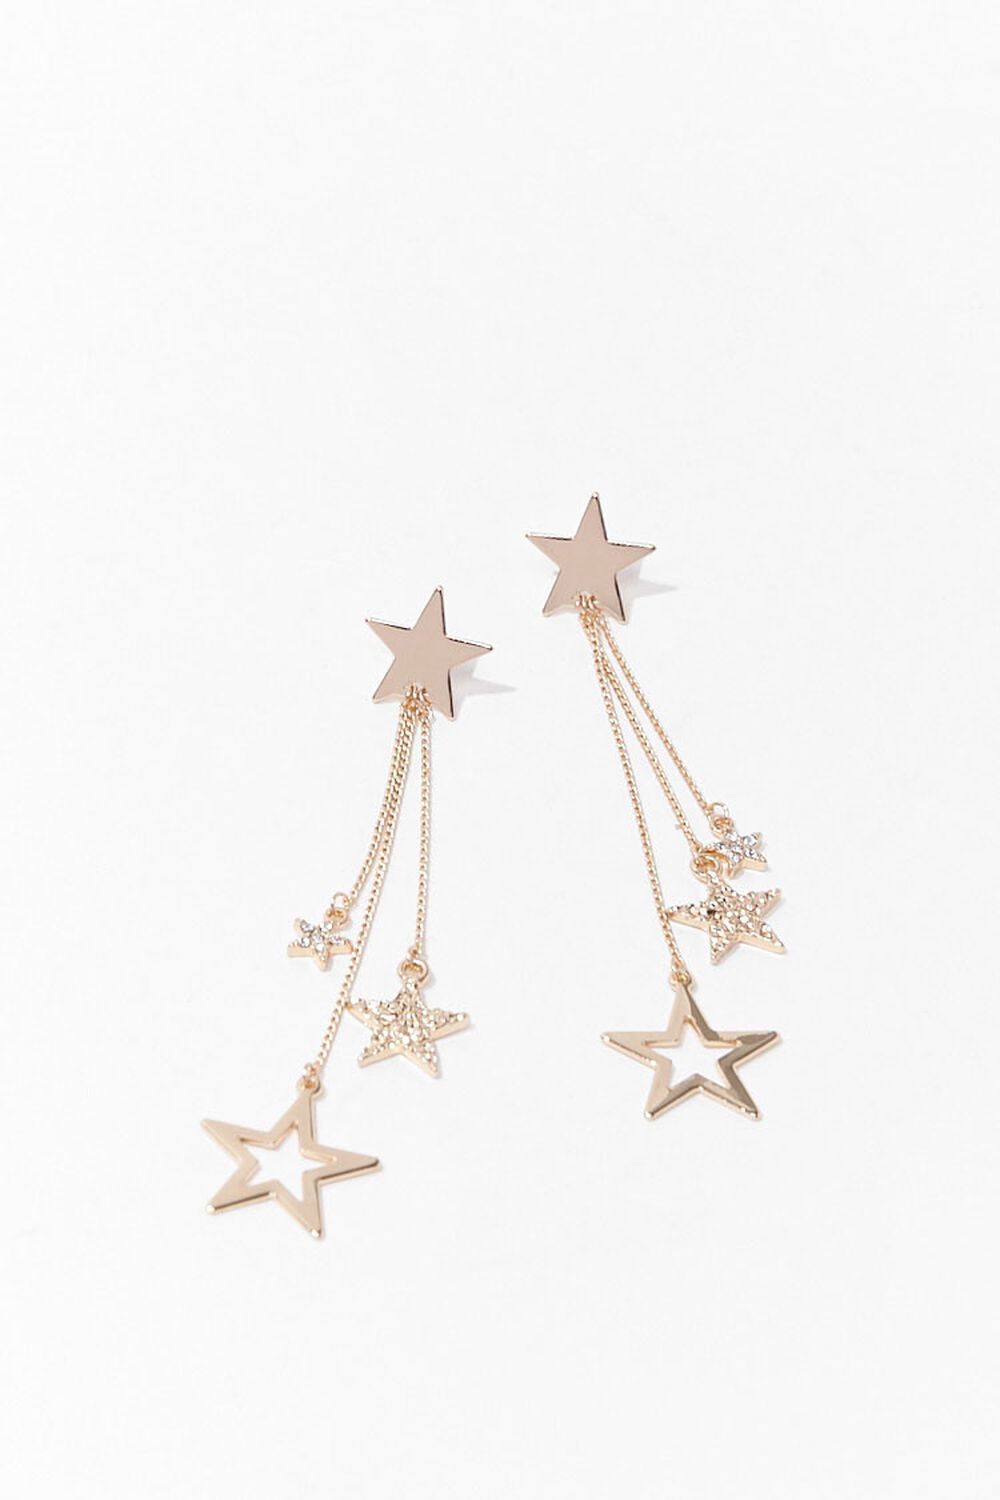 GOLD/CLEAR Rhinestone Star Drop Earrings, image 2